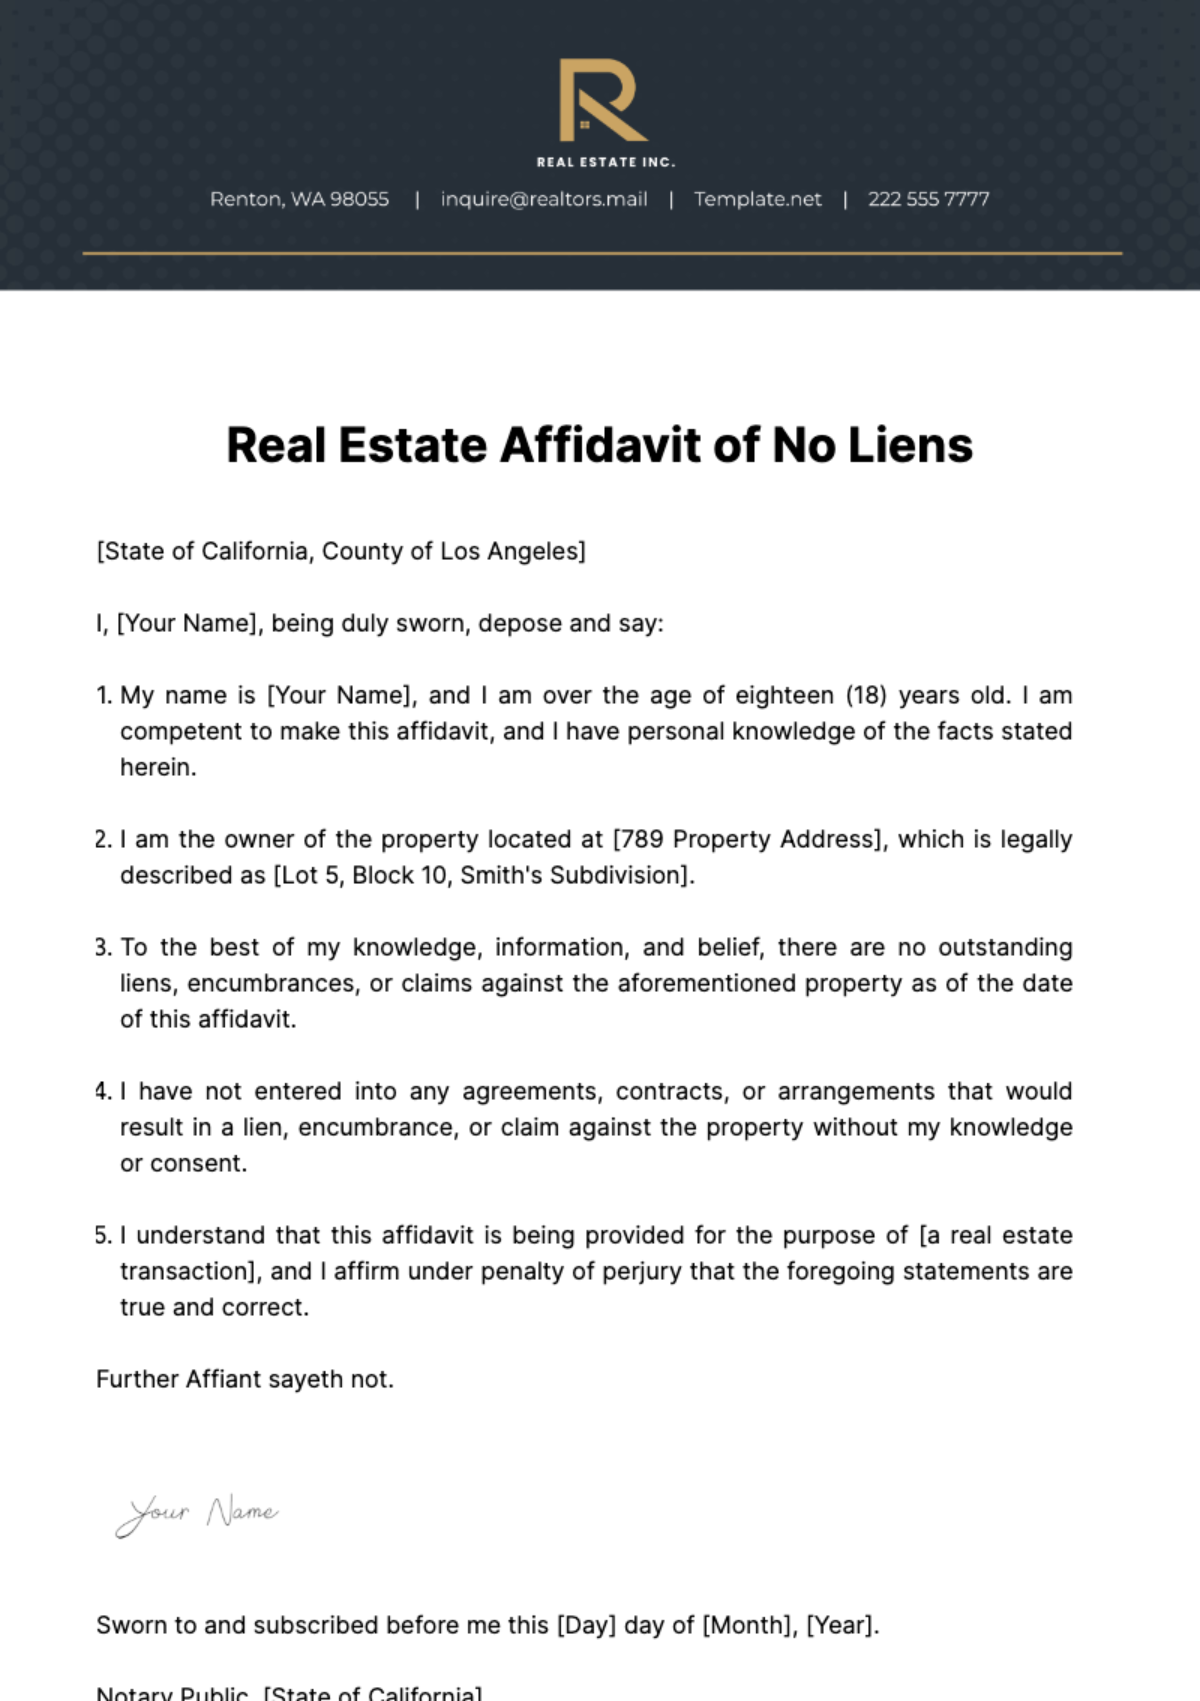 Real Estate Affidavit of No Liens Template